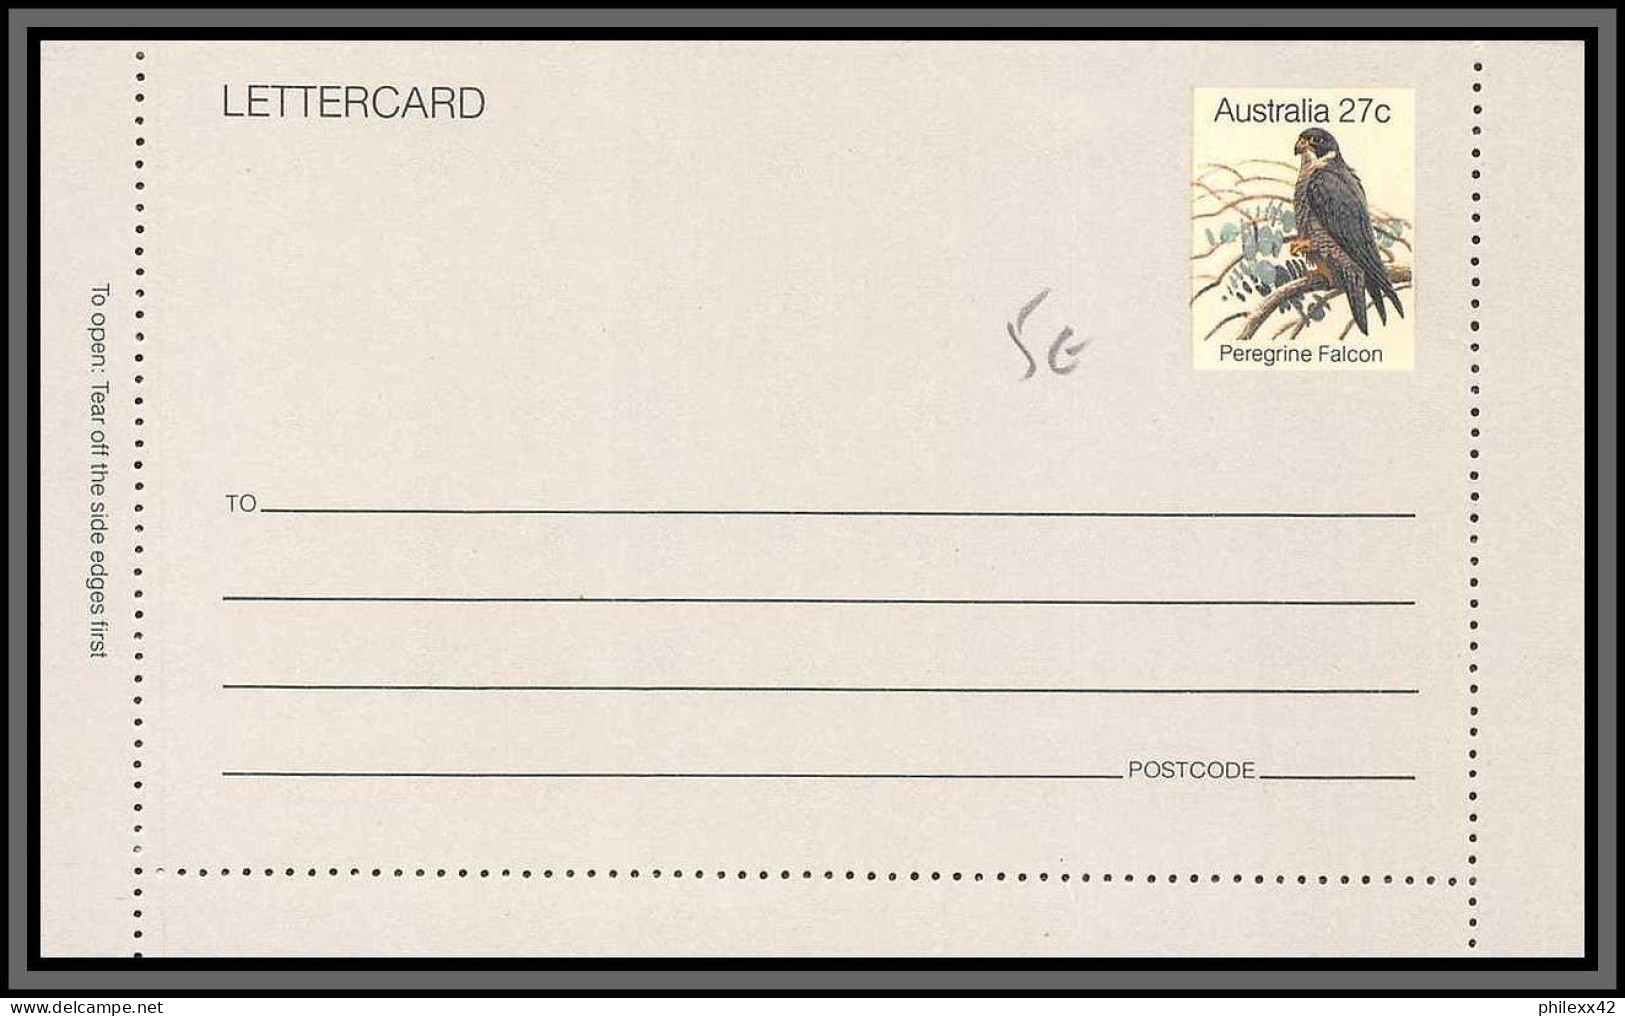 11247 PEREGRINE FALCON Faucon Pèlerin Neuf Tb Entier Stationery Letter Card Australie Australia  - Postal Stationery